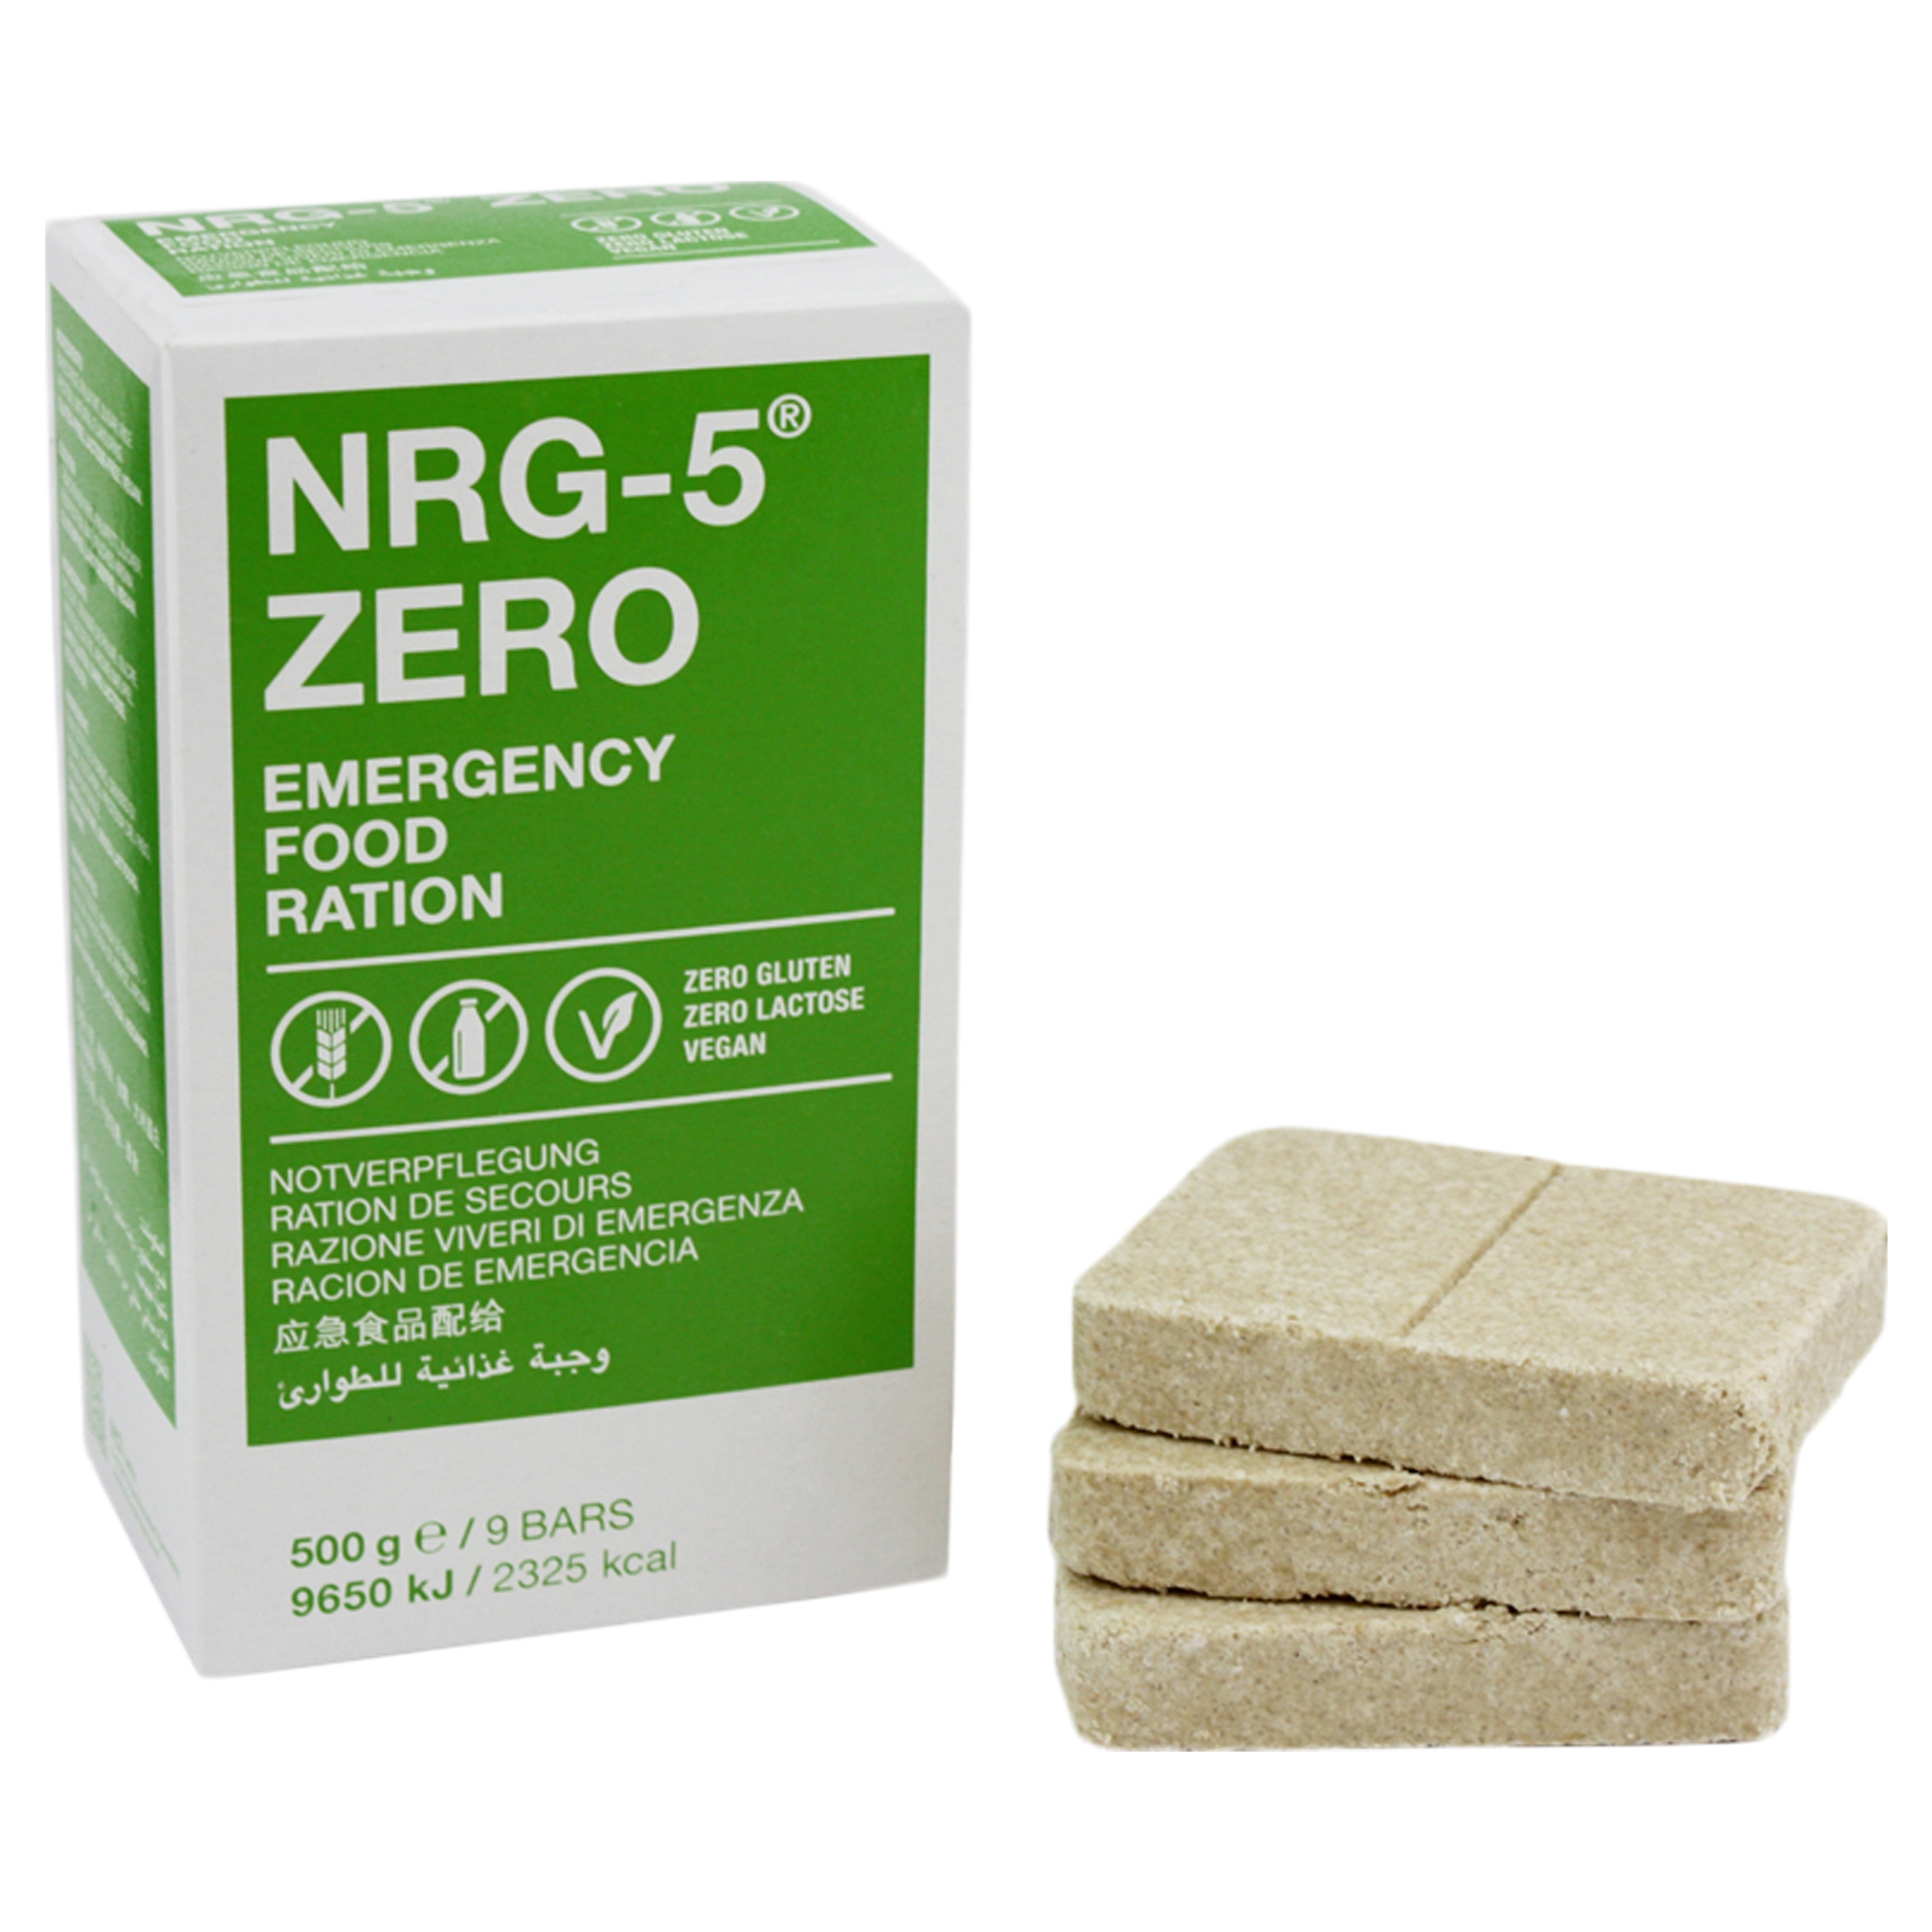 MSI NRG-5 Energieriegel 500g Notration Emergency Food Ration 11,25€/kg 